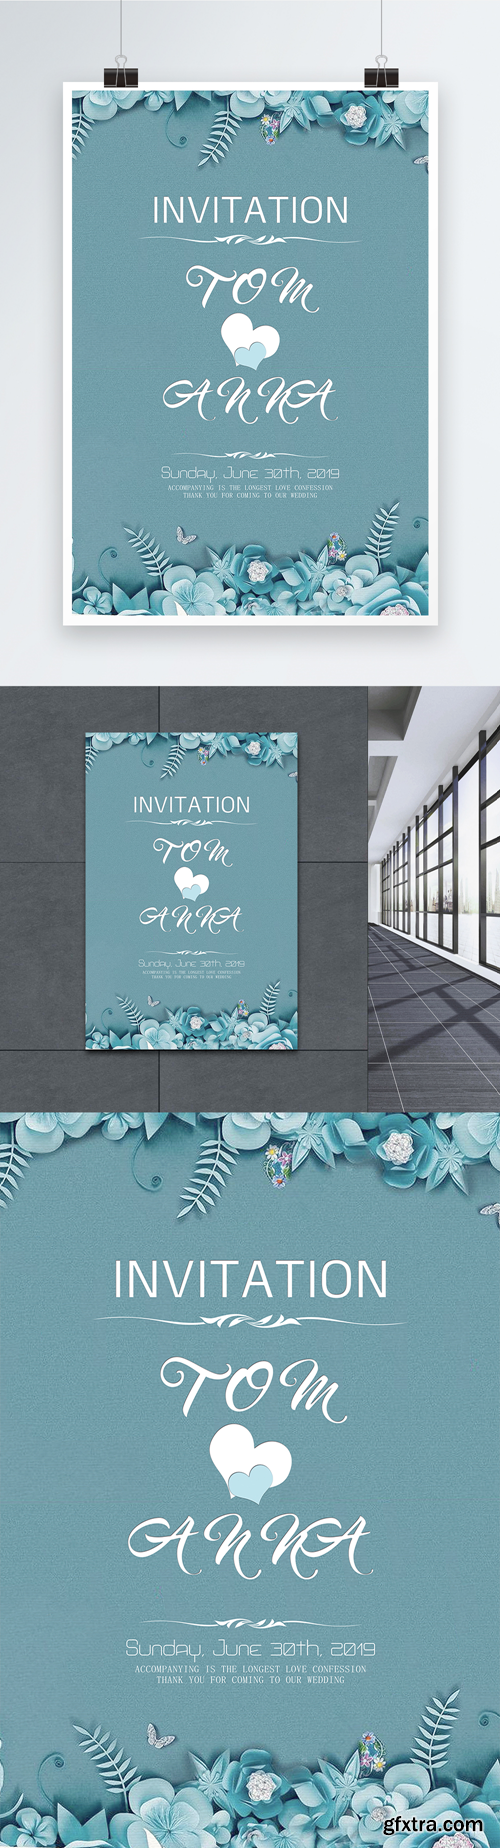 wedding invitation english poster